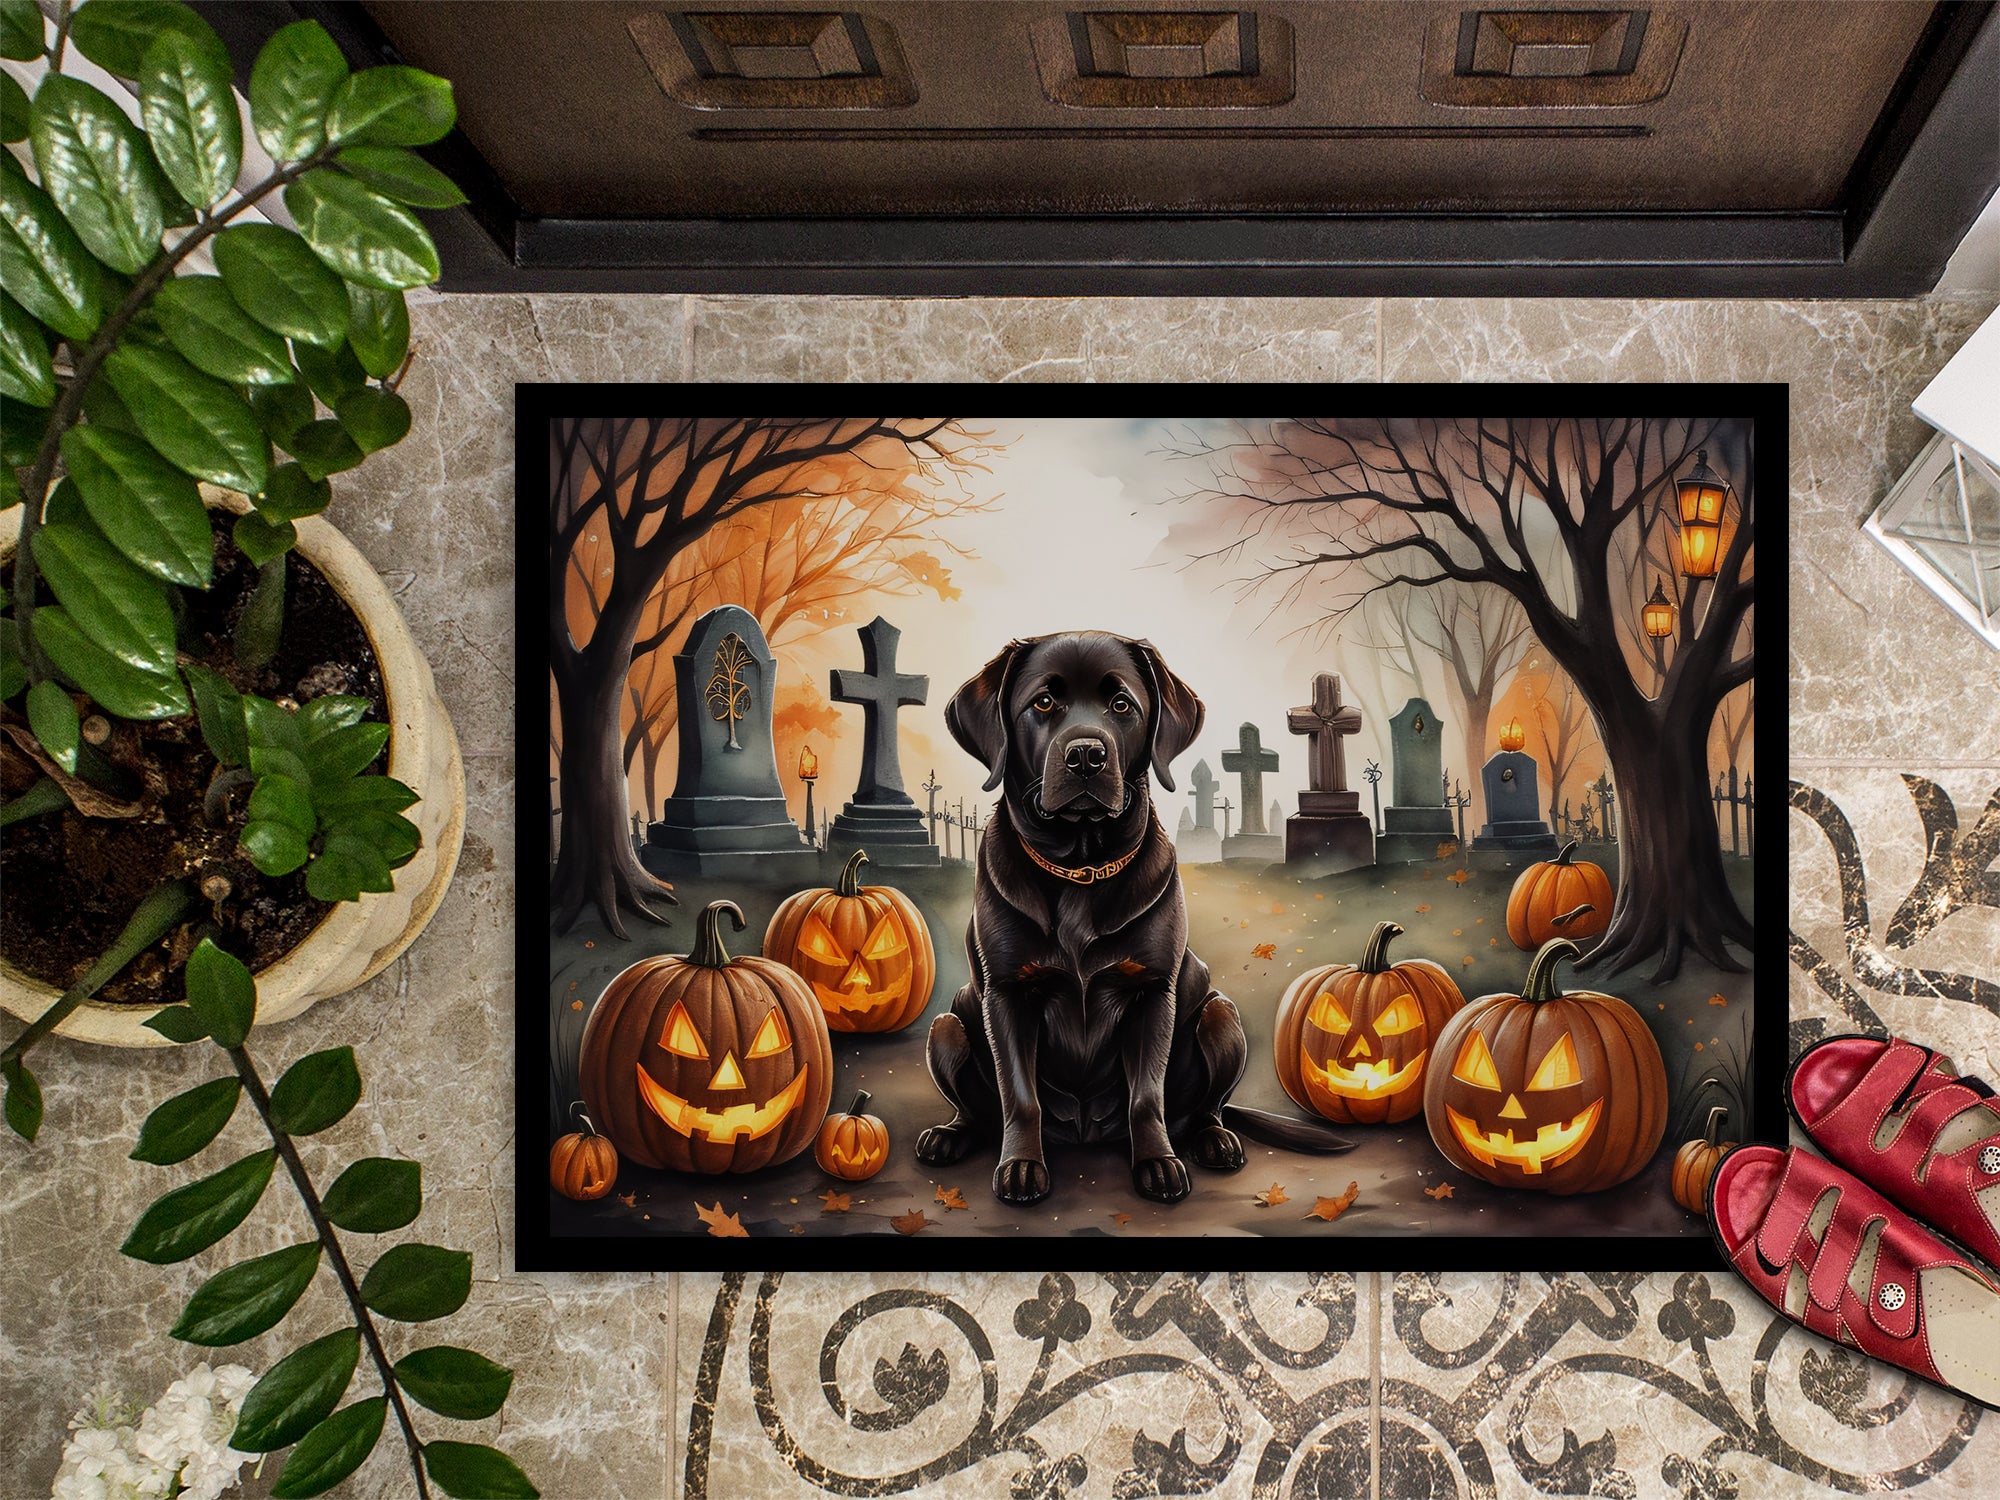 Chocolate Labrador Retriever Spooky Halloween Doormat 18x27